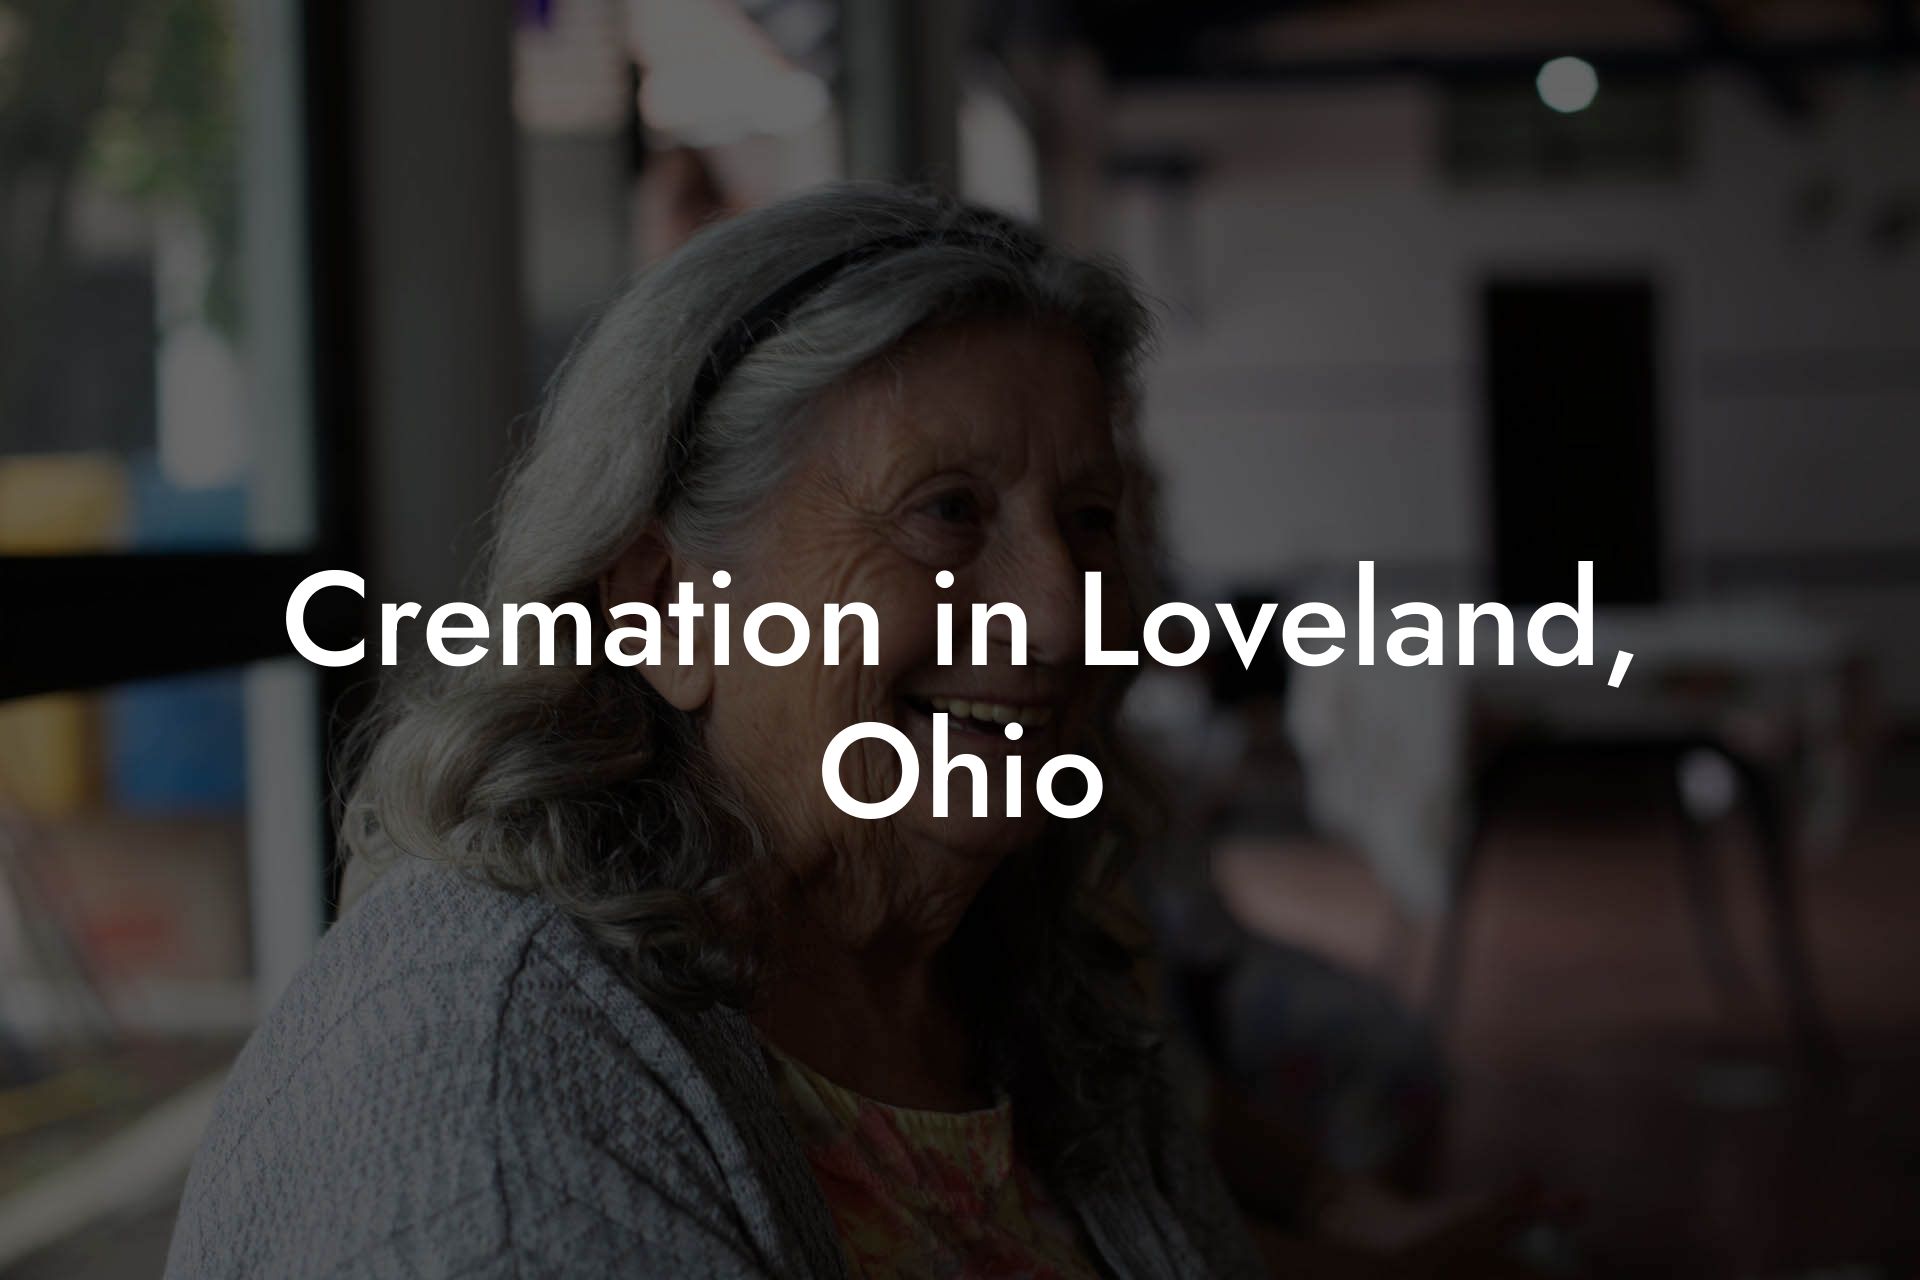 Cremation in Loveland, Ohio